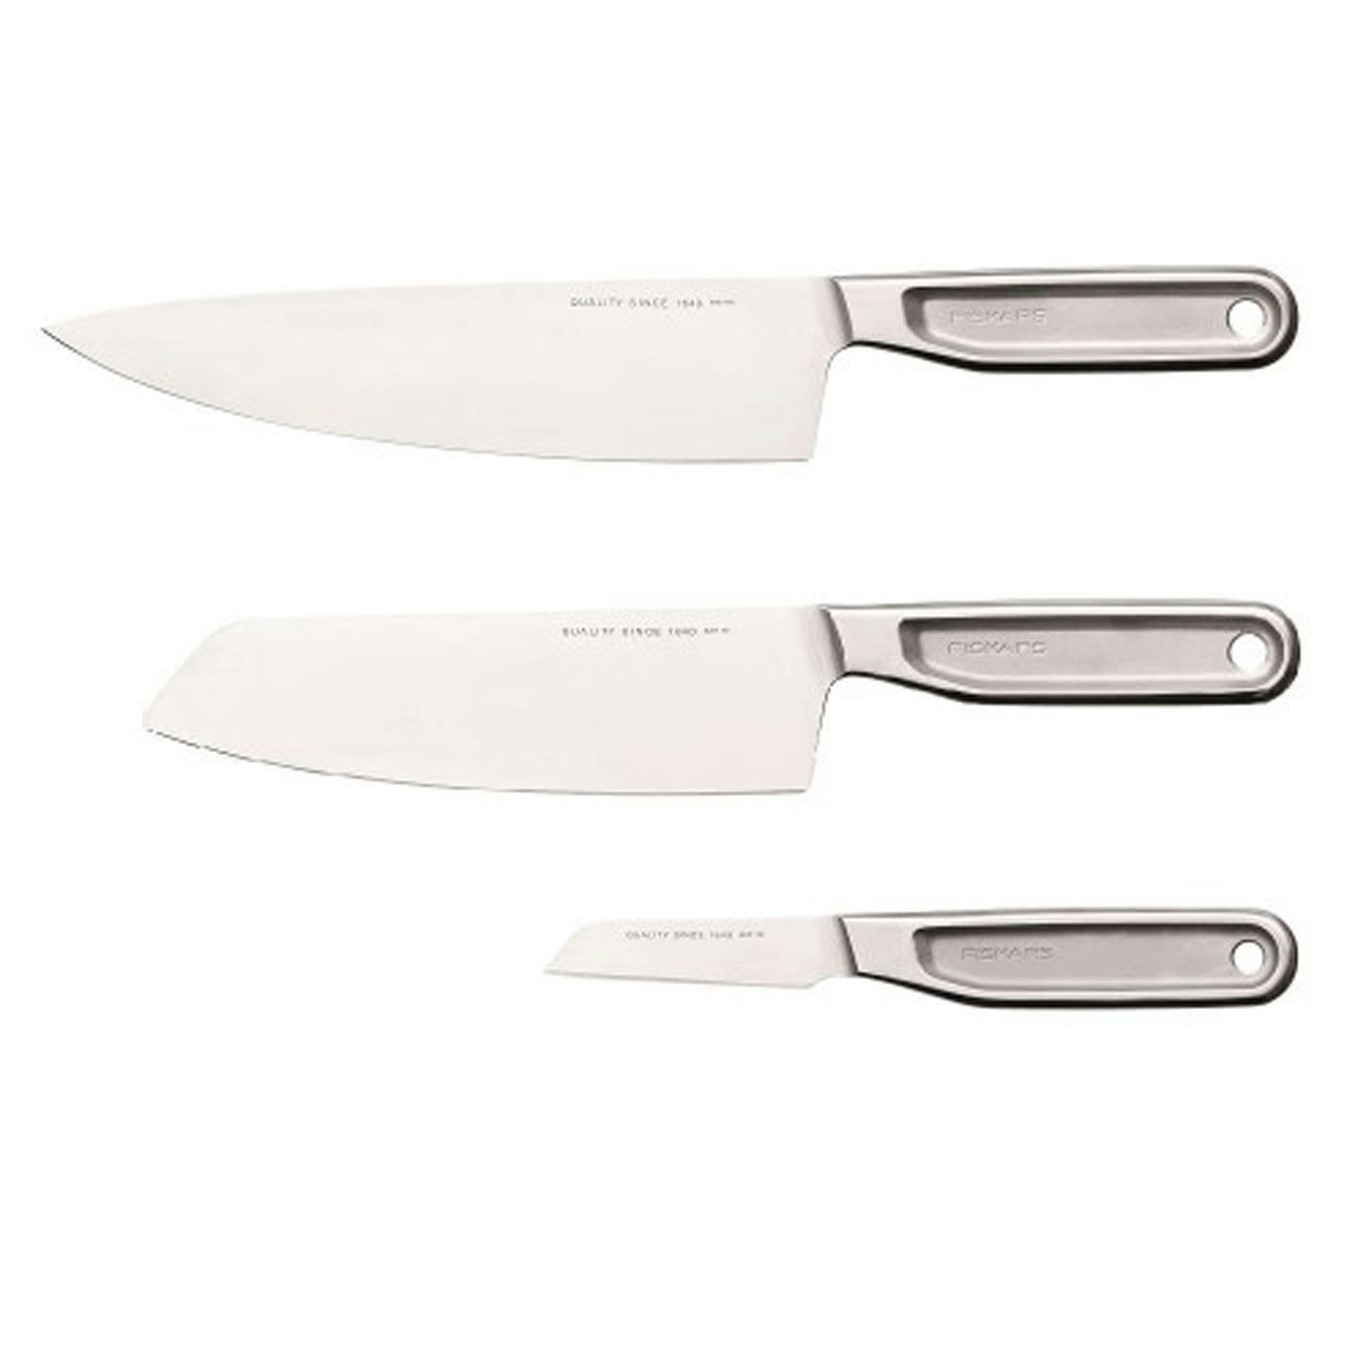 https://royaldesign.com/image/2/fiskars-all-steel-knife-set-3-parts-0?w=800&quality=80